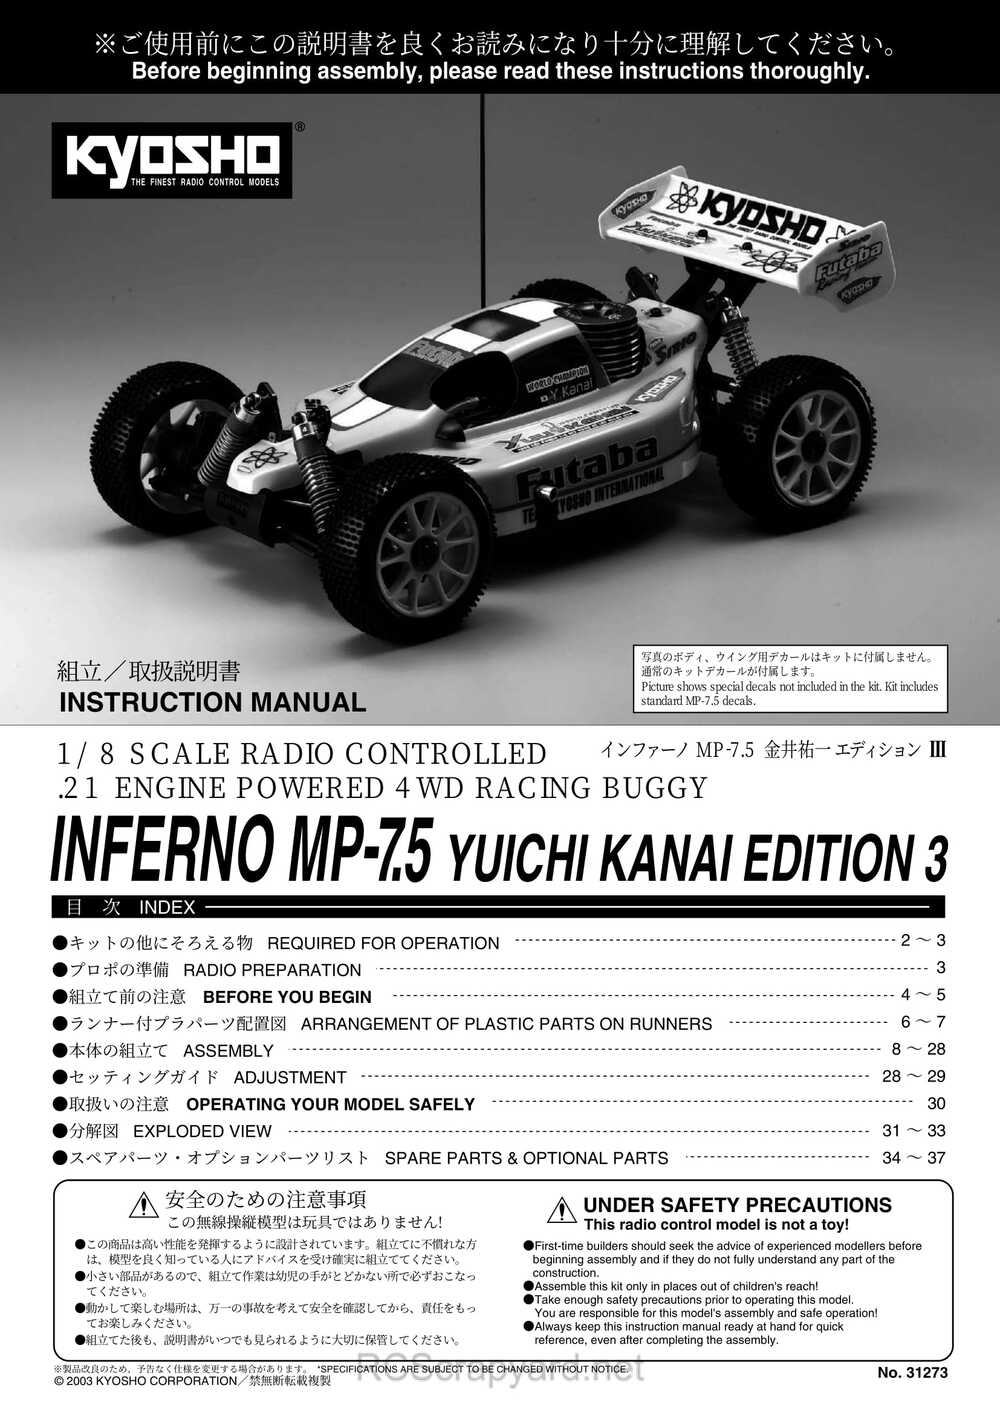 Kyosho - 31273 - Inferno-MP-7-5-Yuichi3 - Manual - Page 01